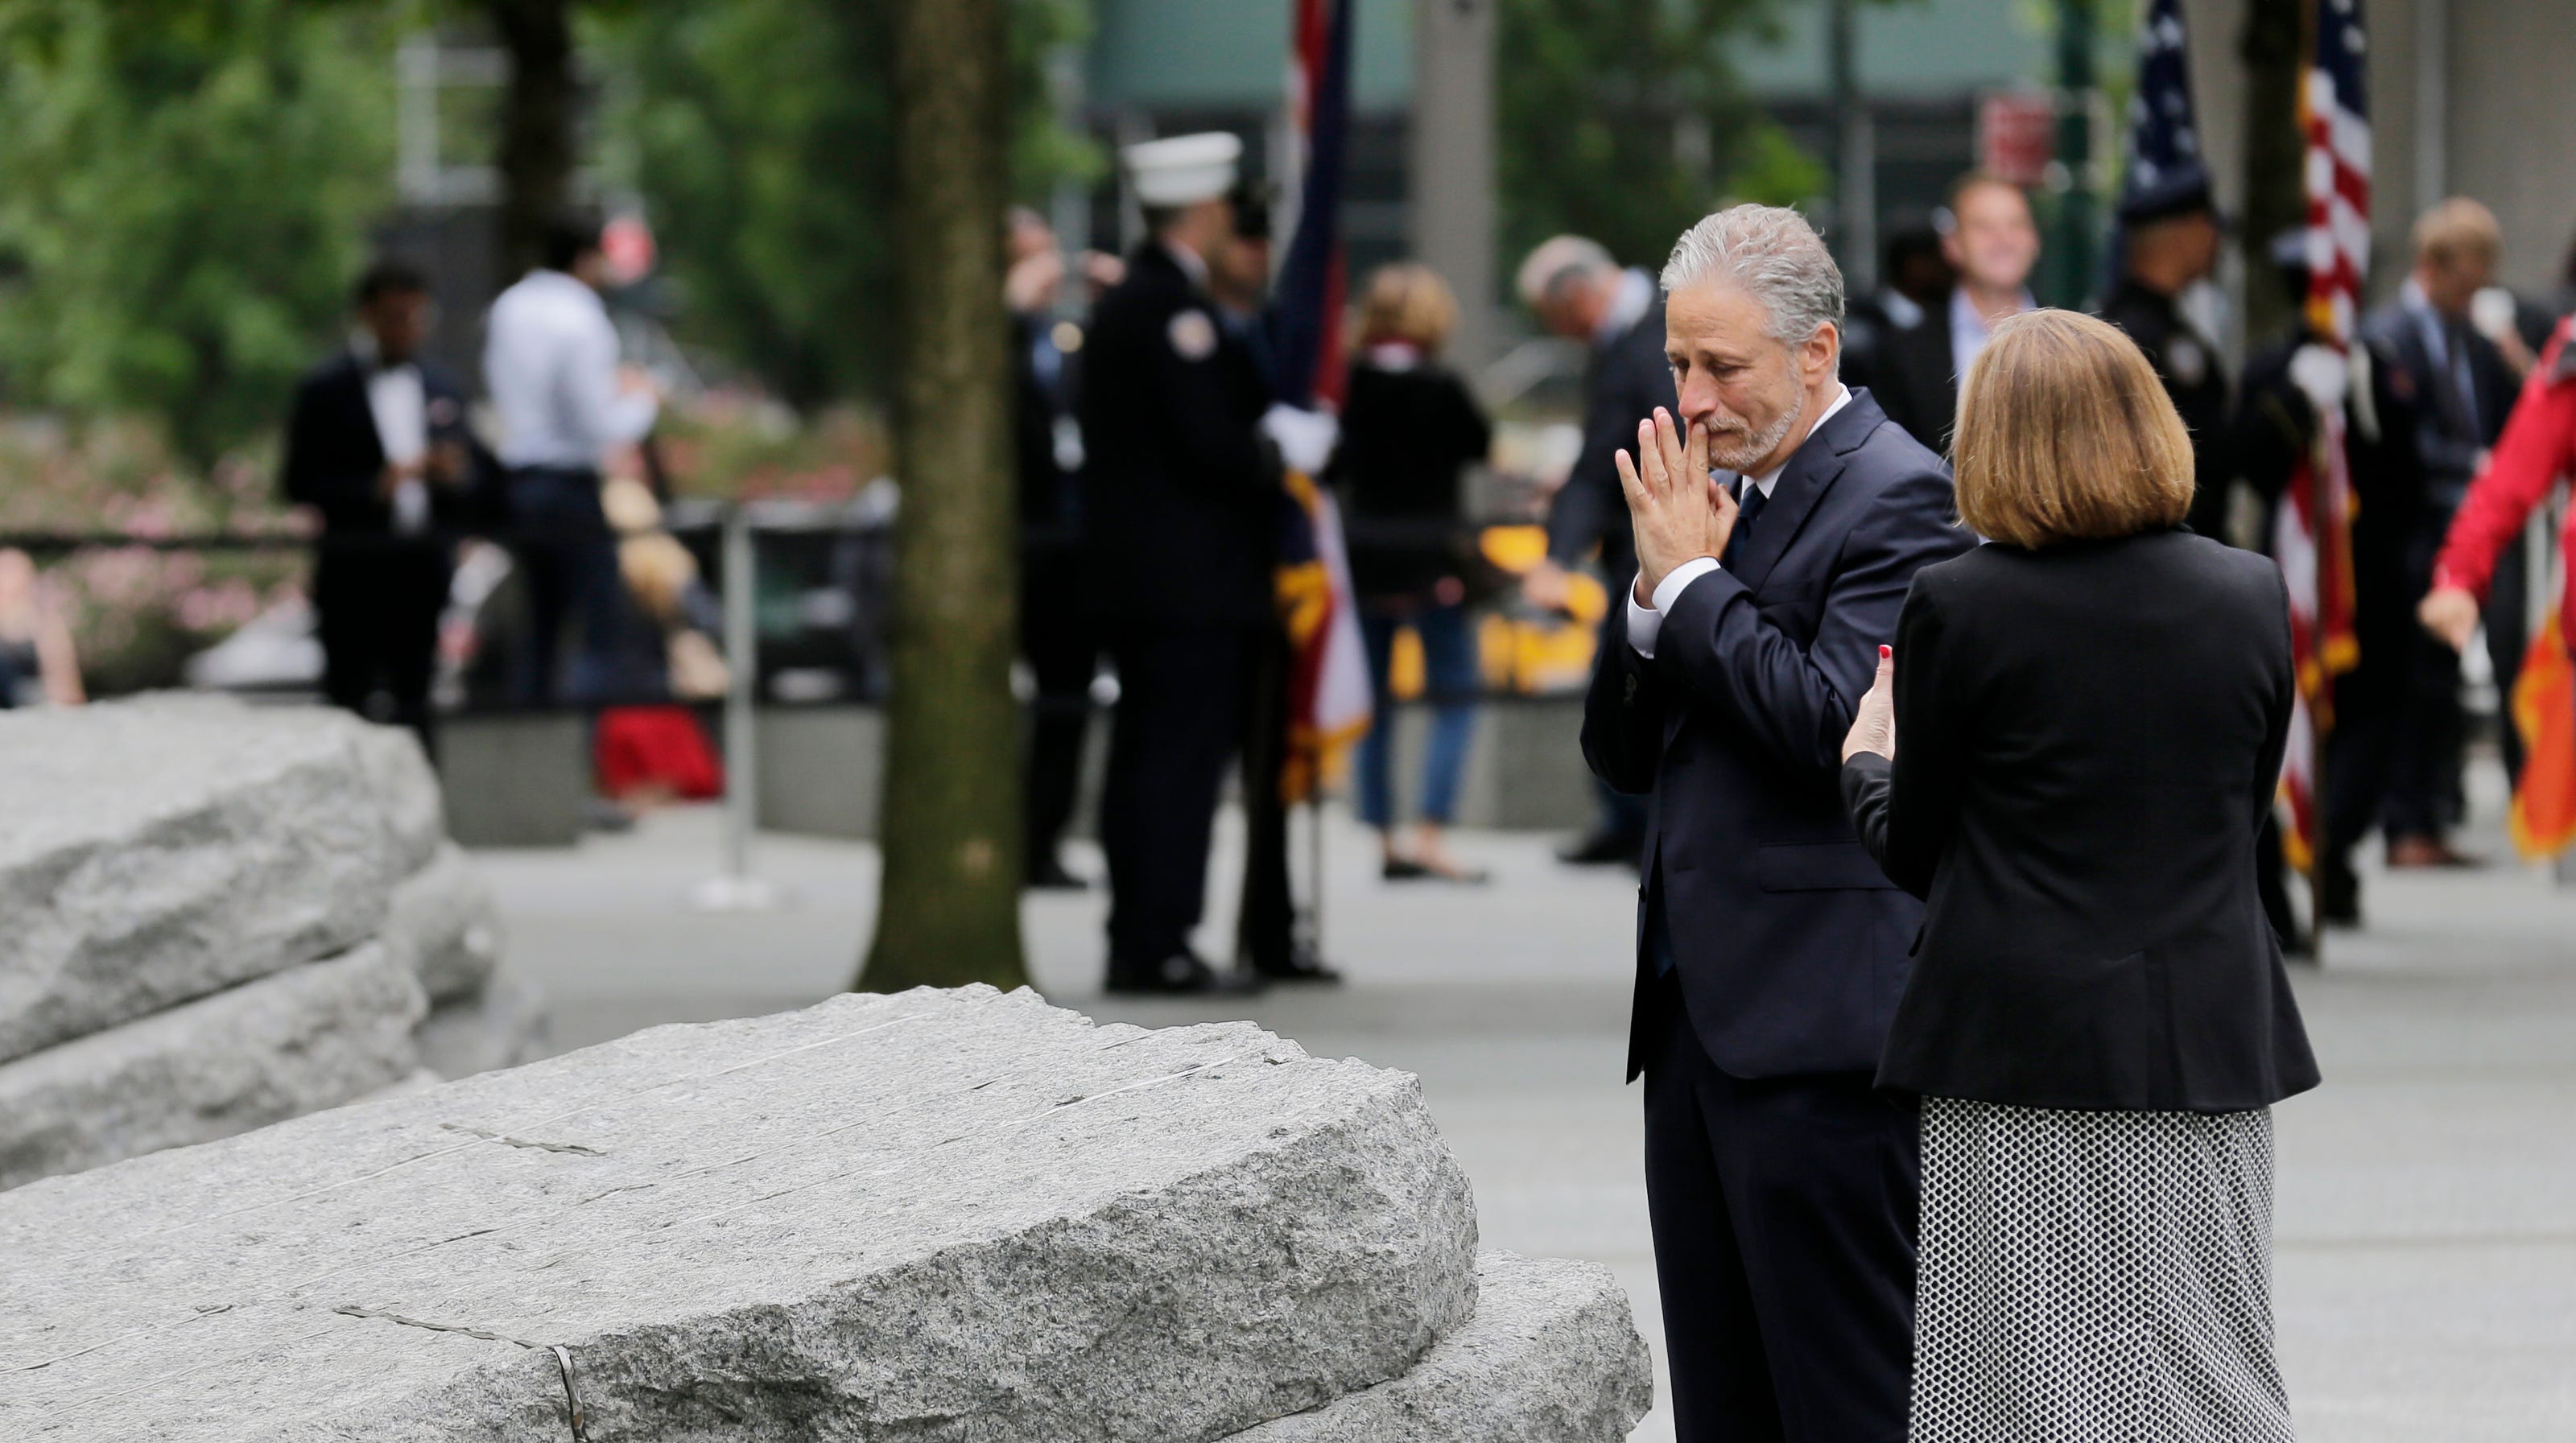 9/11 Memorial Glade: New memorial dedicated at World Trade Center site